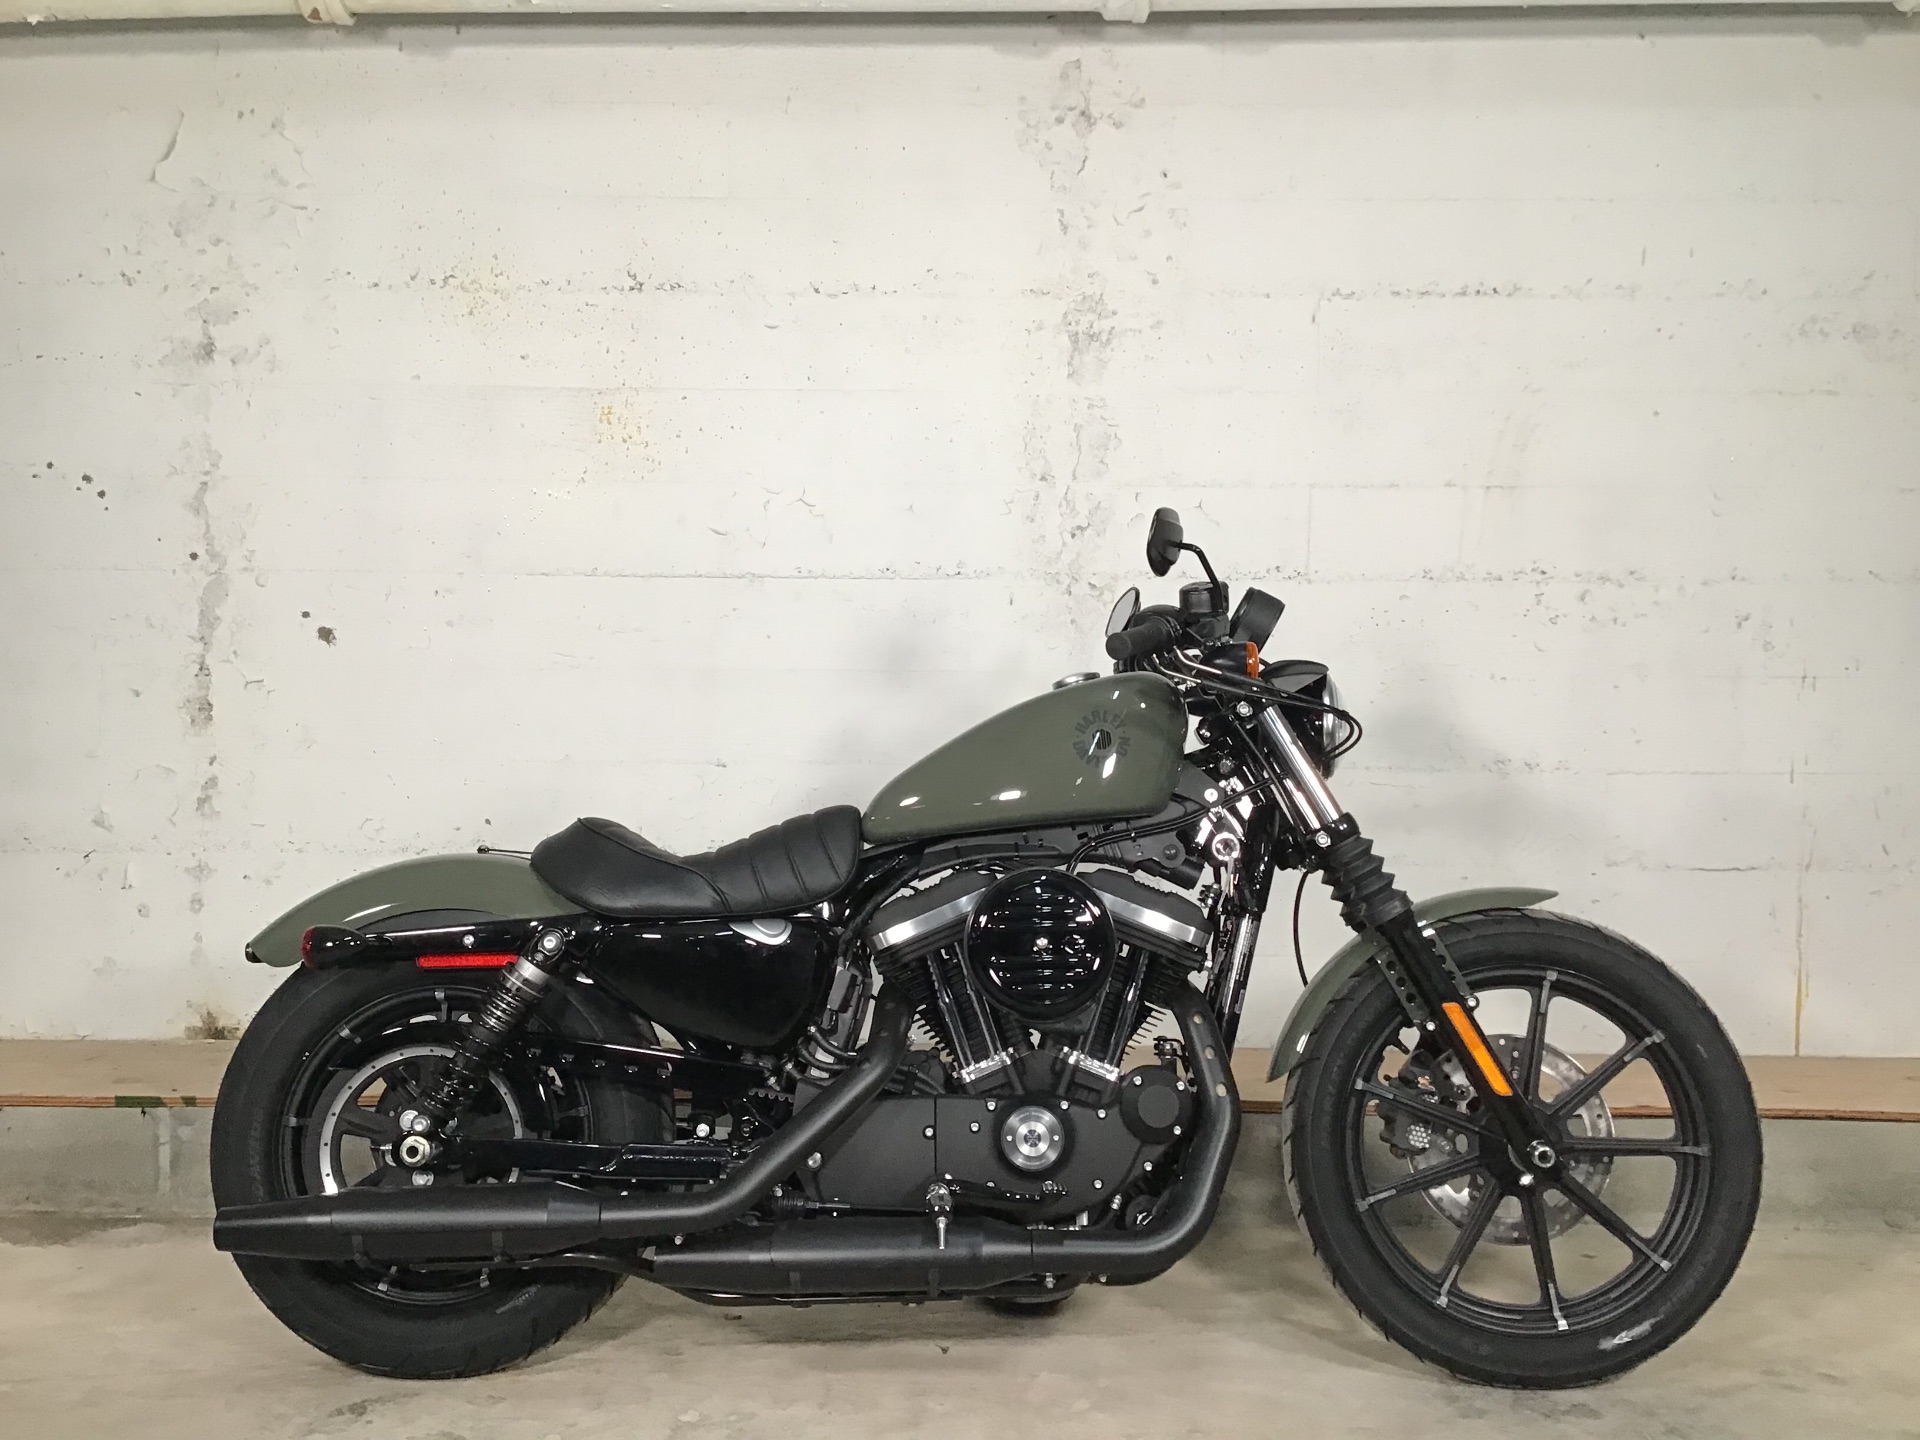 New 2021 Harley Davidson Iron 883 Deadwood Green Motorcycles In San Francisco Ca N416221